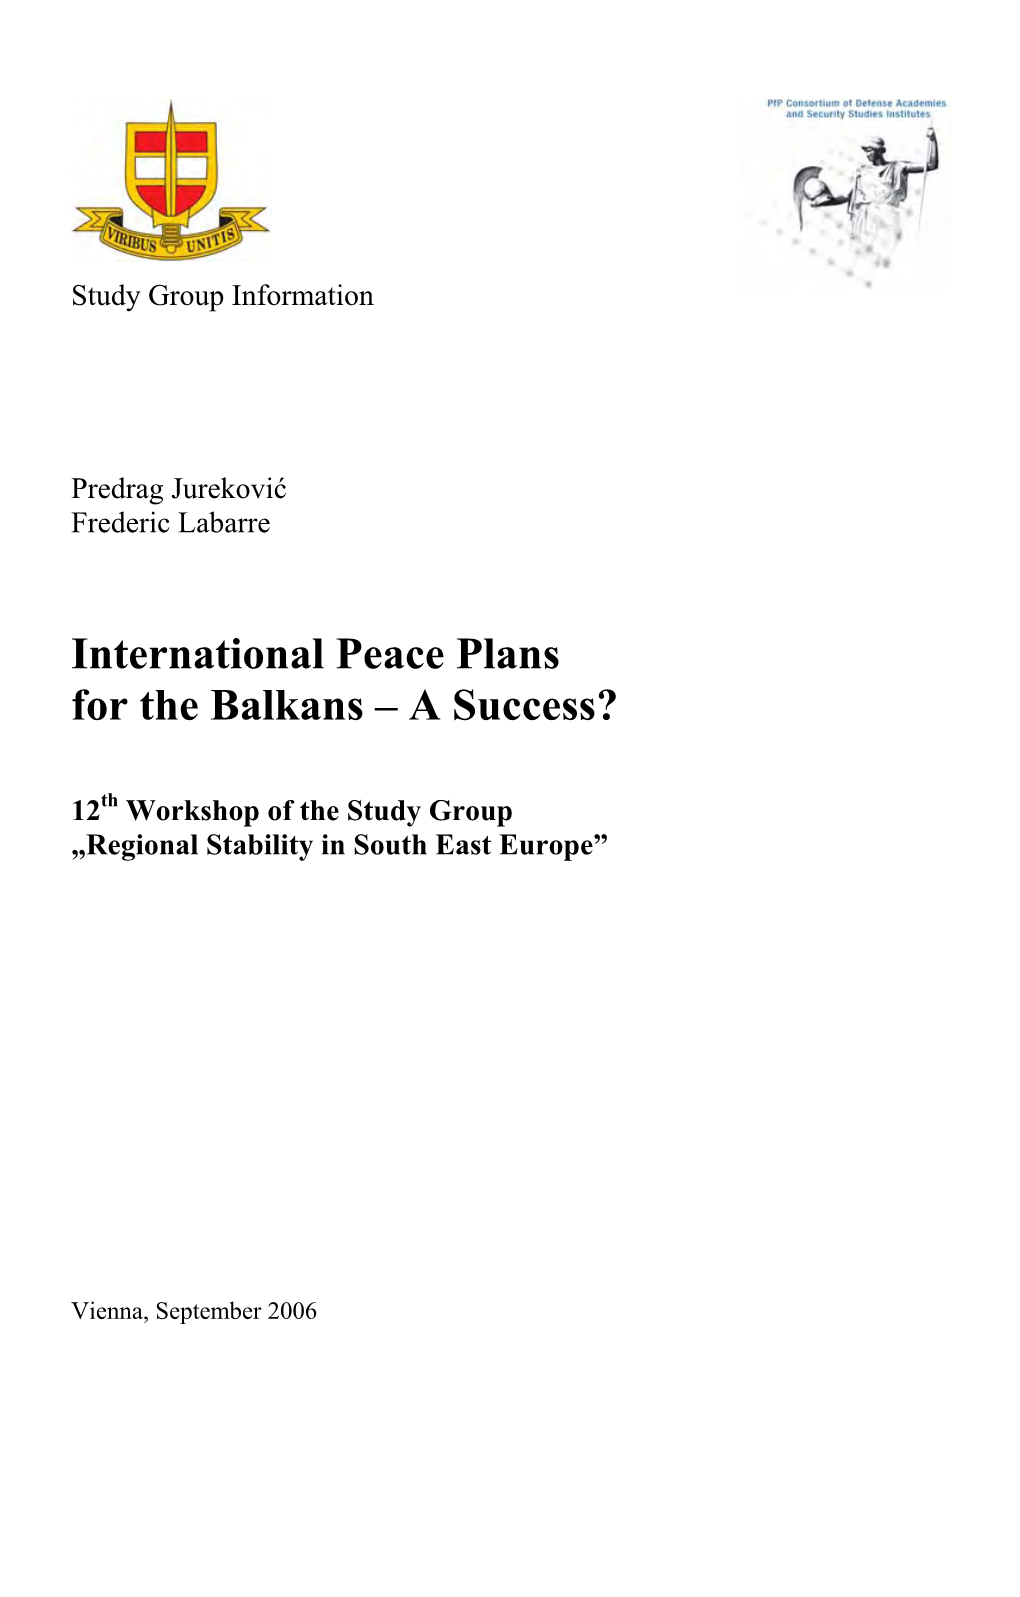 International Peace Plans for the Balkans – a Success?